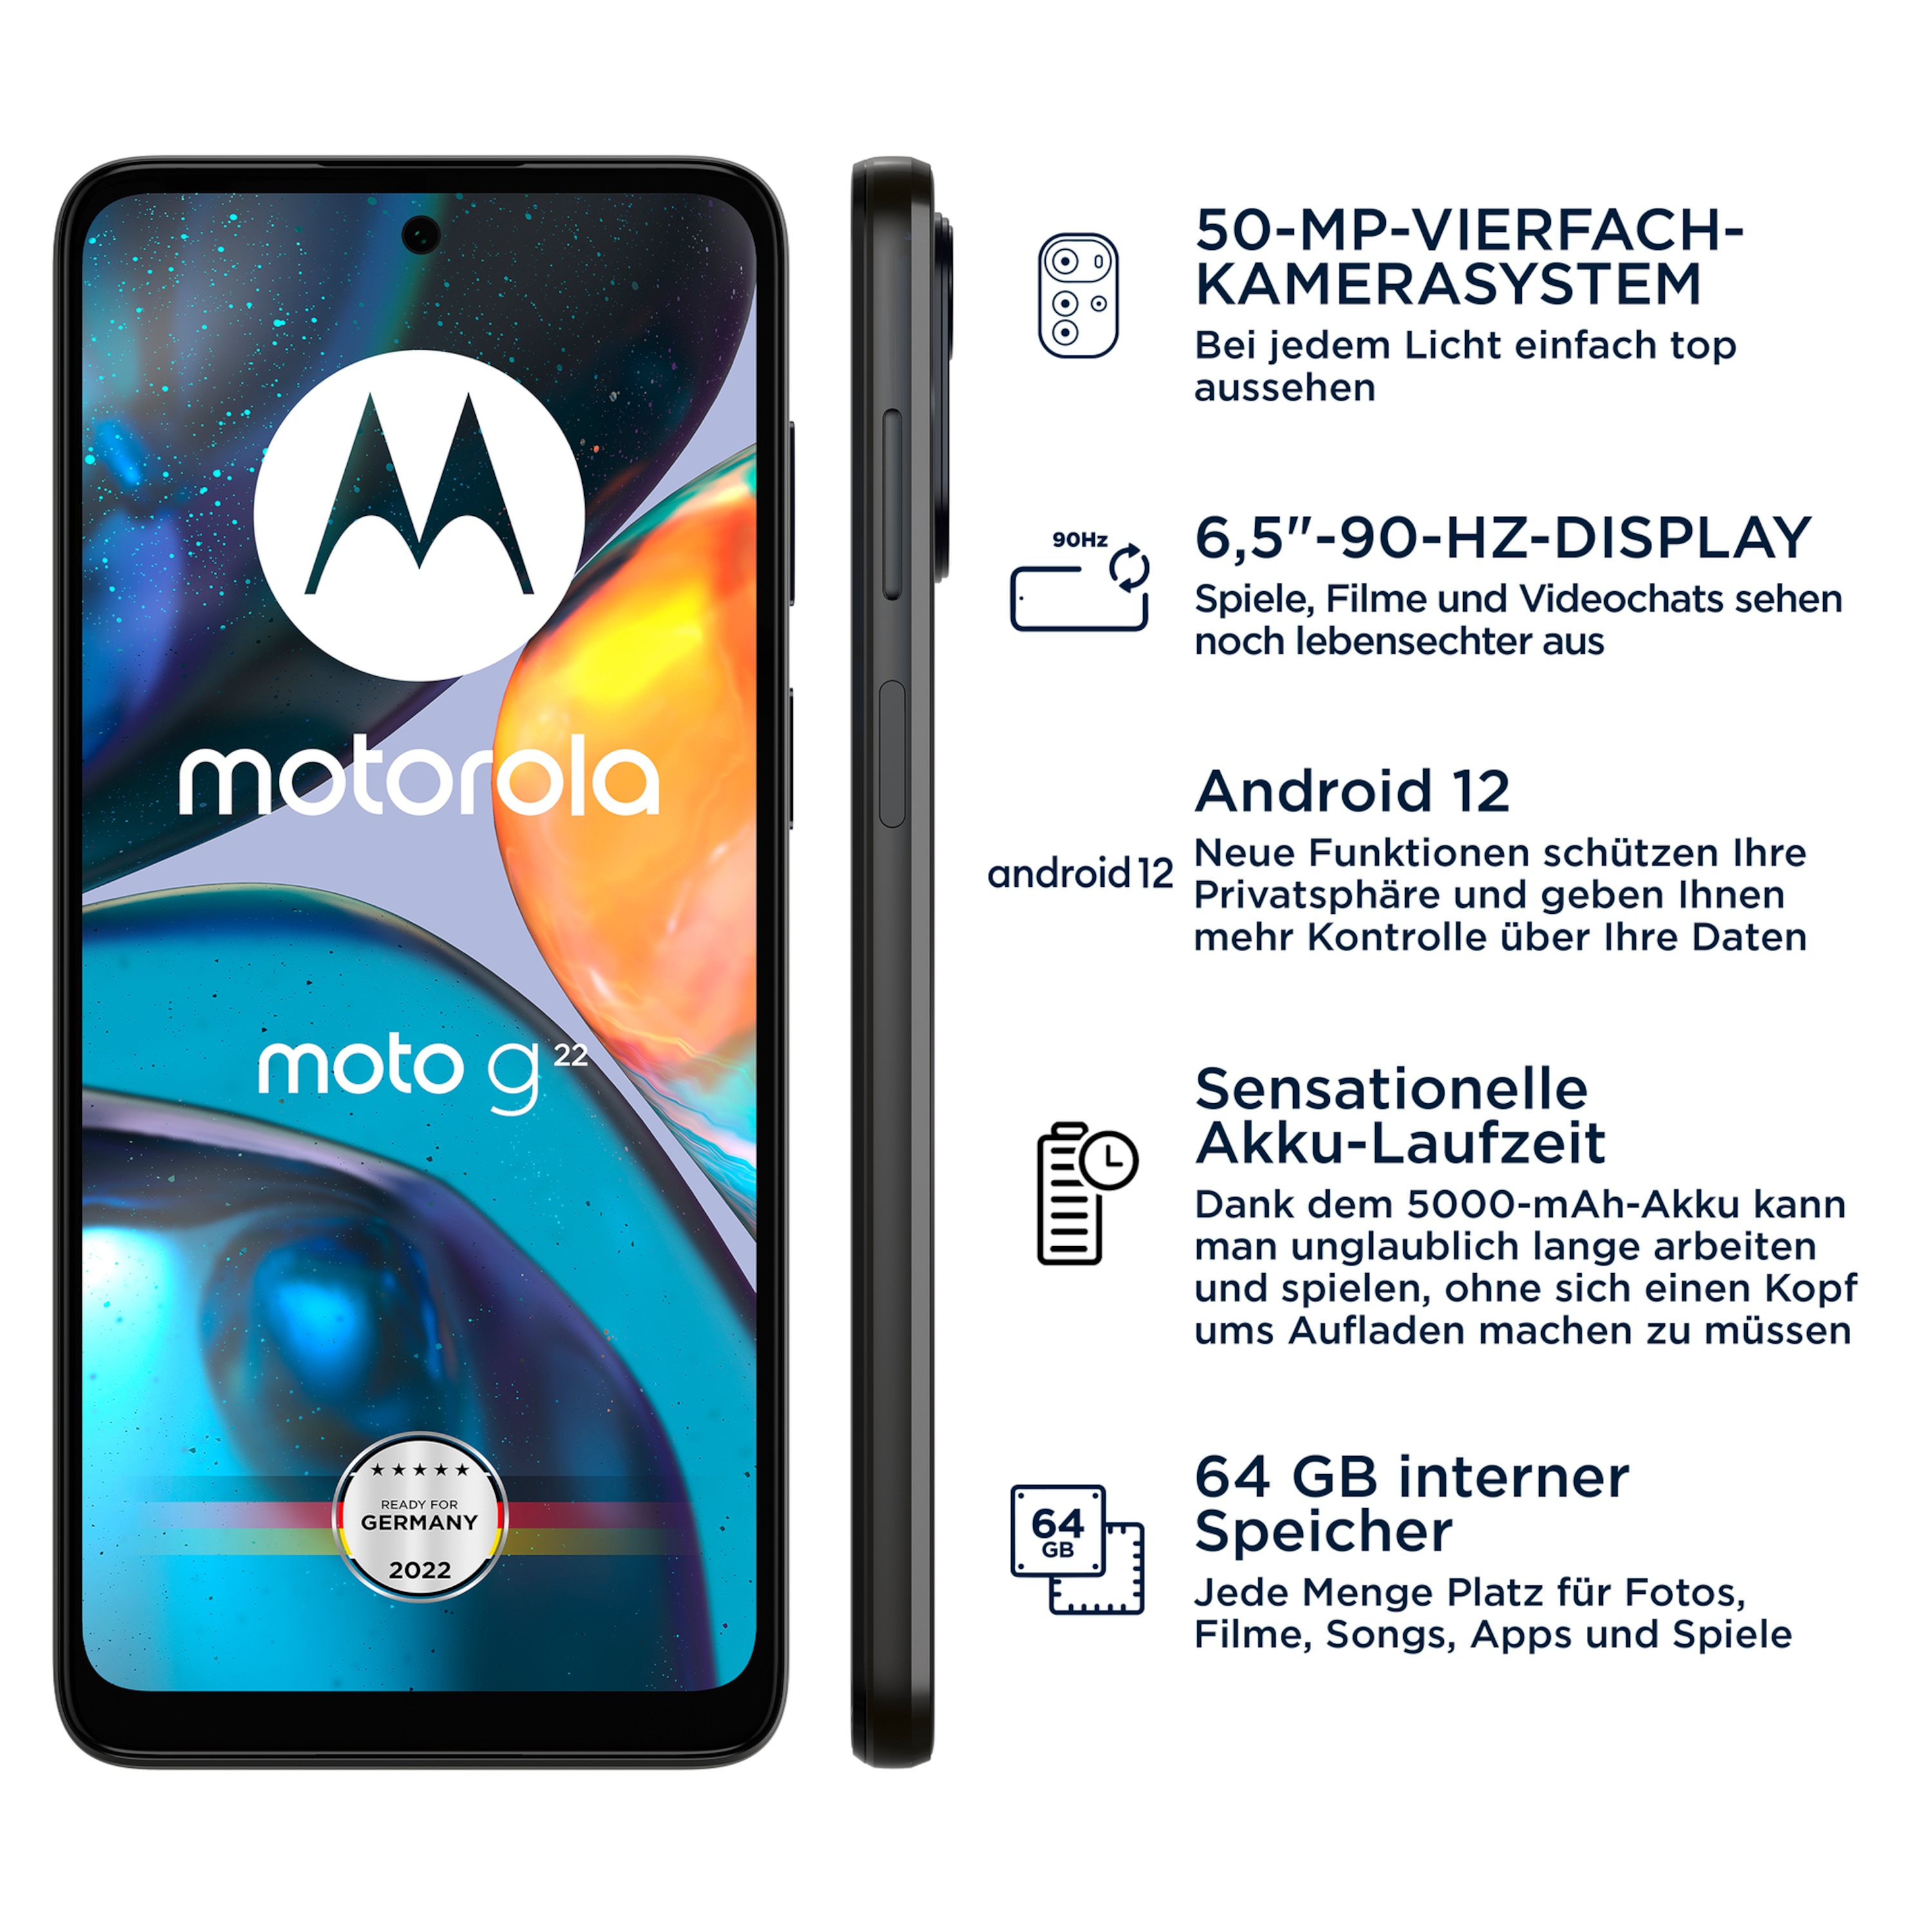 MOTOROLA moto g22 Smartphone, 16,51 cm (6,5") HD+ Display, Betriebssystem Android™ 12, 64 GB interner Speicher, 4 GB RAM, Fingerabdrucksensor, Farbe: Cosmic Black